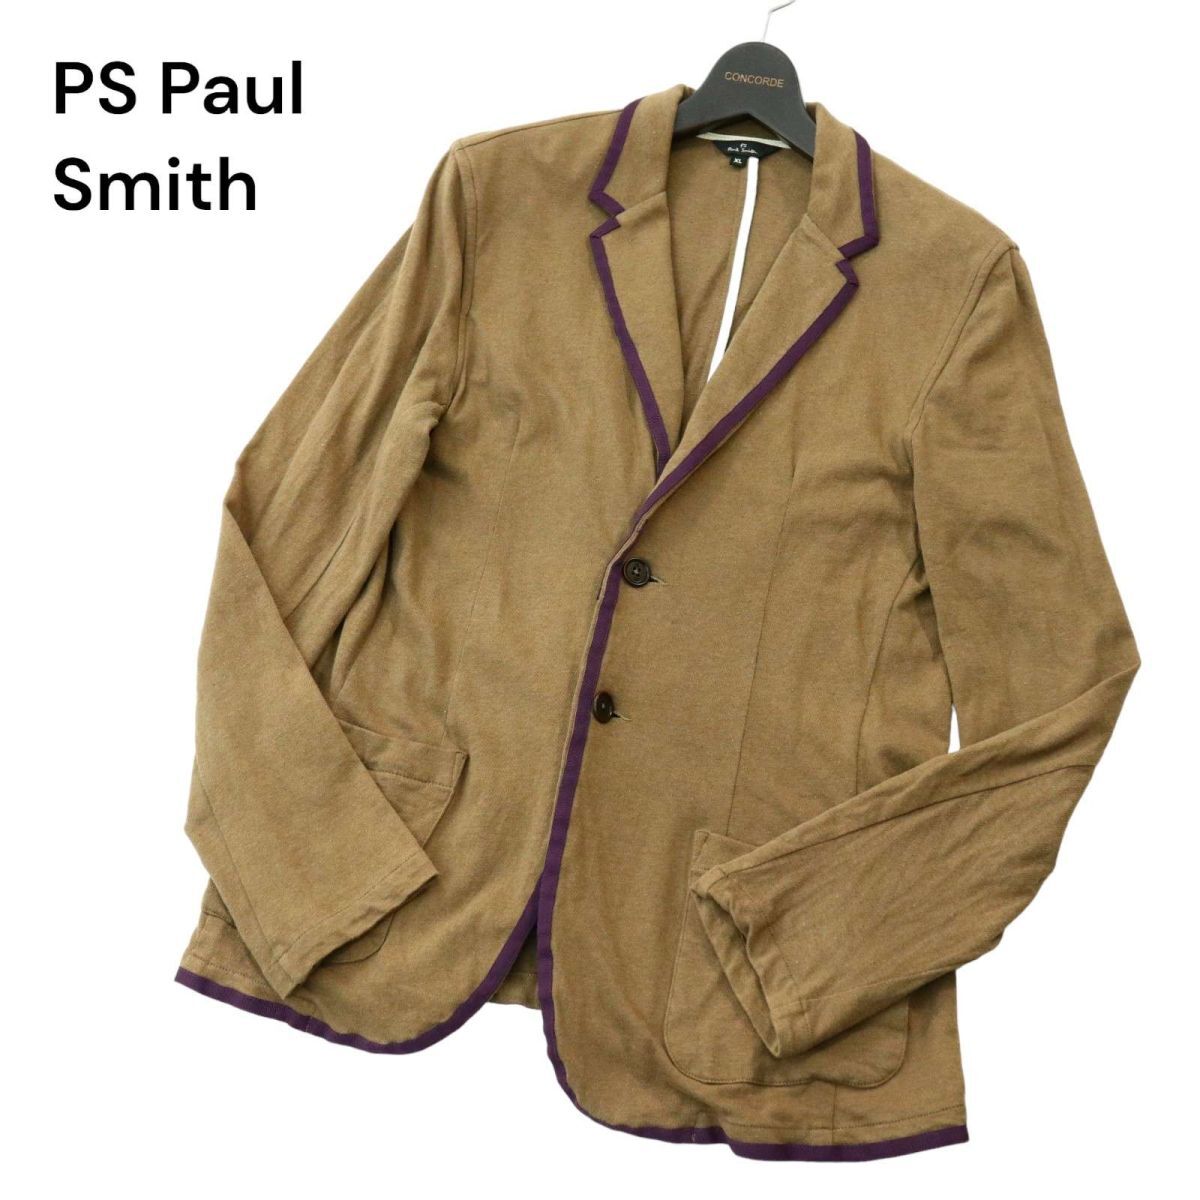 PS Paul Smith Paul Smith весна лето лен linen.* трубчатая обводка cut tailored jacket Sz.XL мужской большой размер A4T01471_2#M